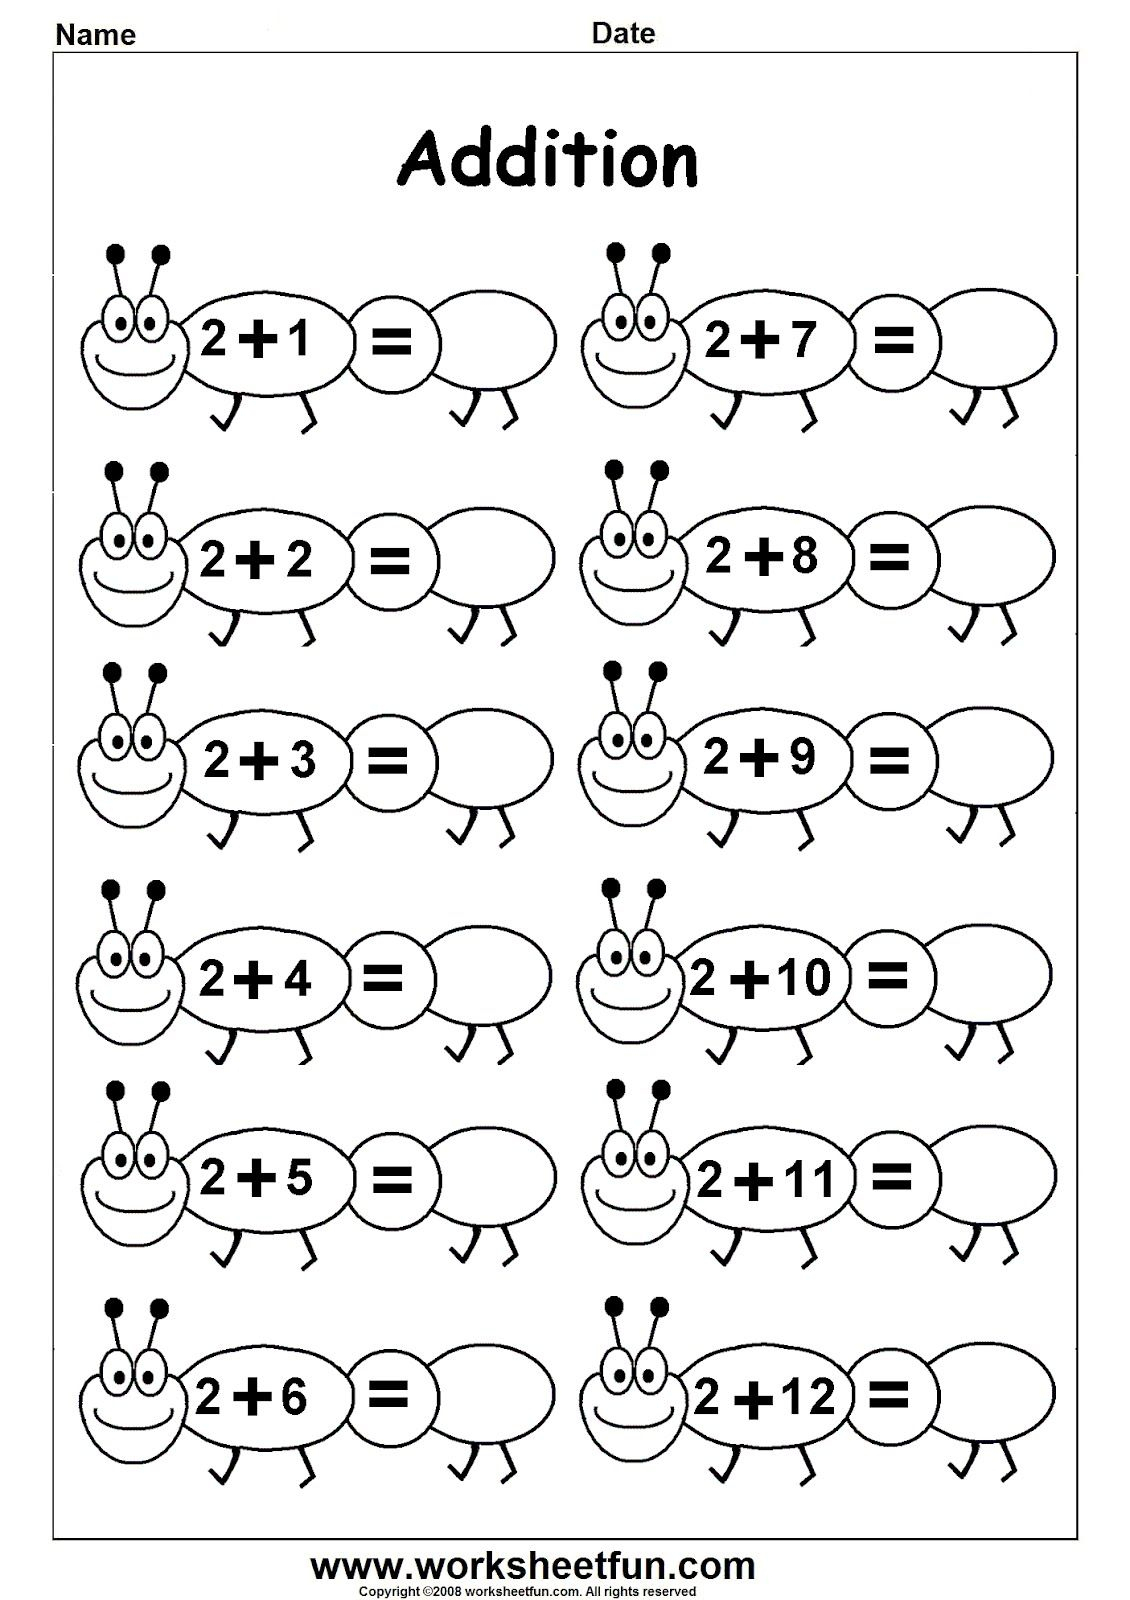 Worksheetfun - Free Printable Worksheets | Maths | Kindergarten Math - Printable Math Puzzles For Kindergarten